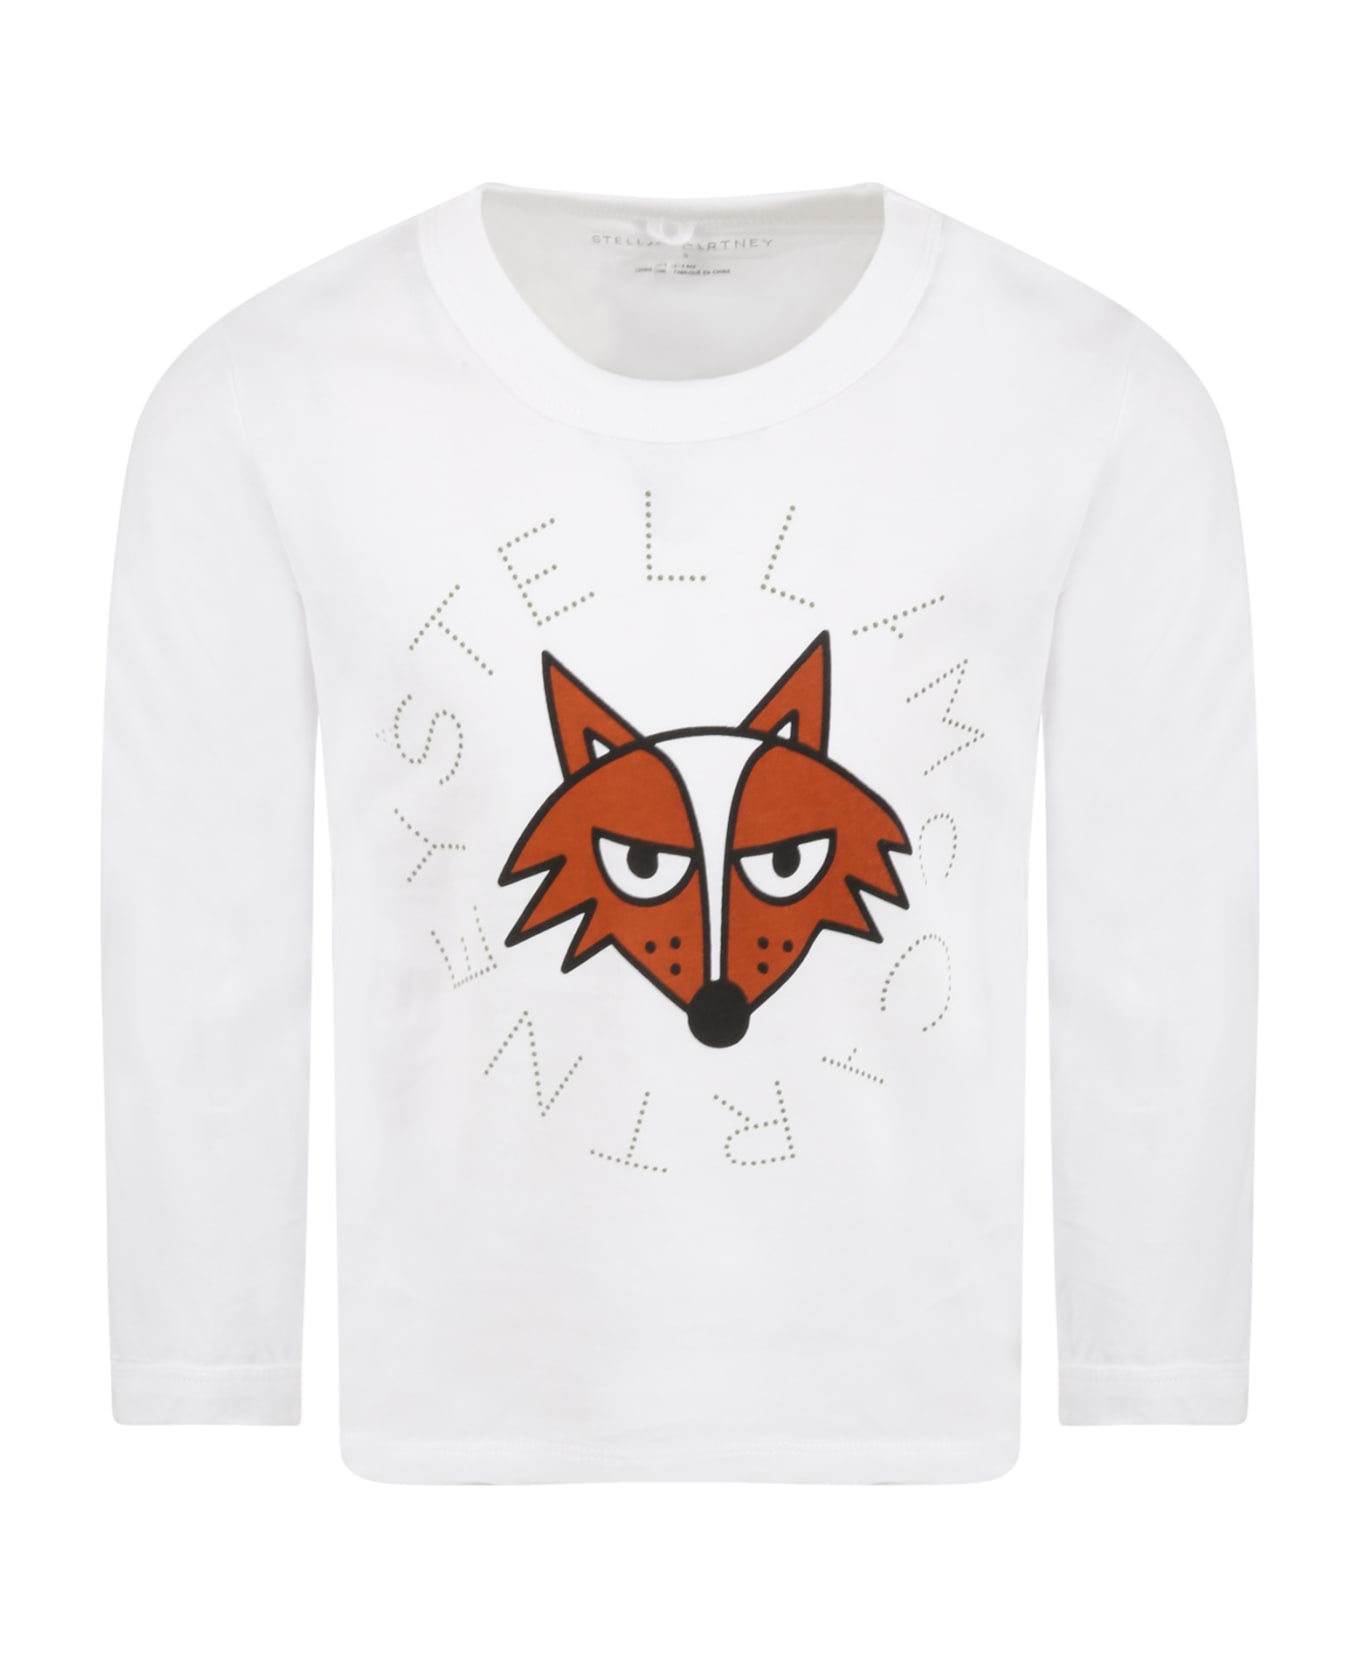 Stella McCartney Kids White T-shirt For Boy With Fox - White